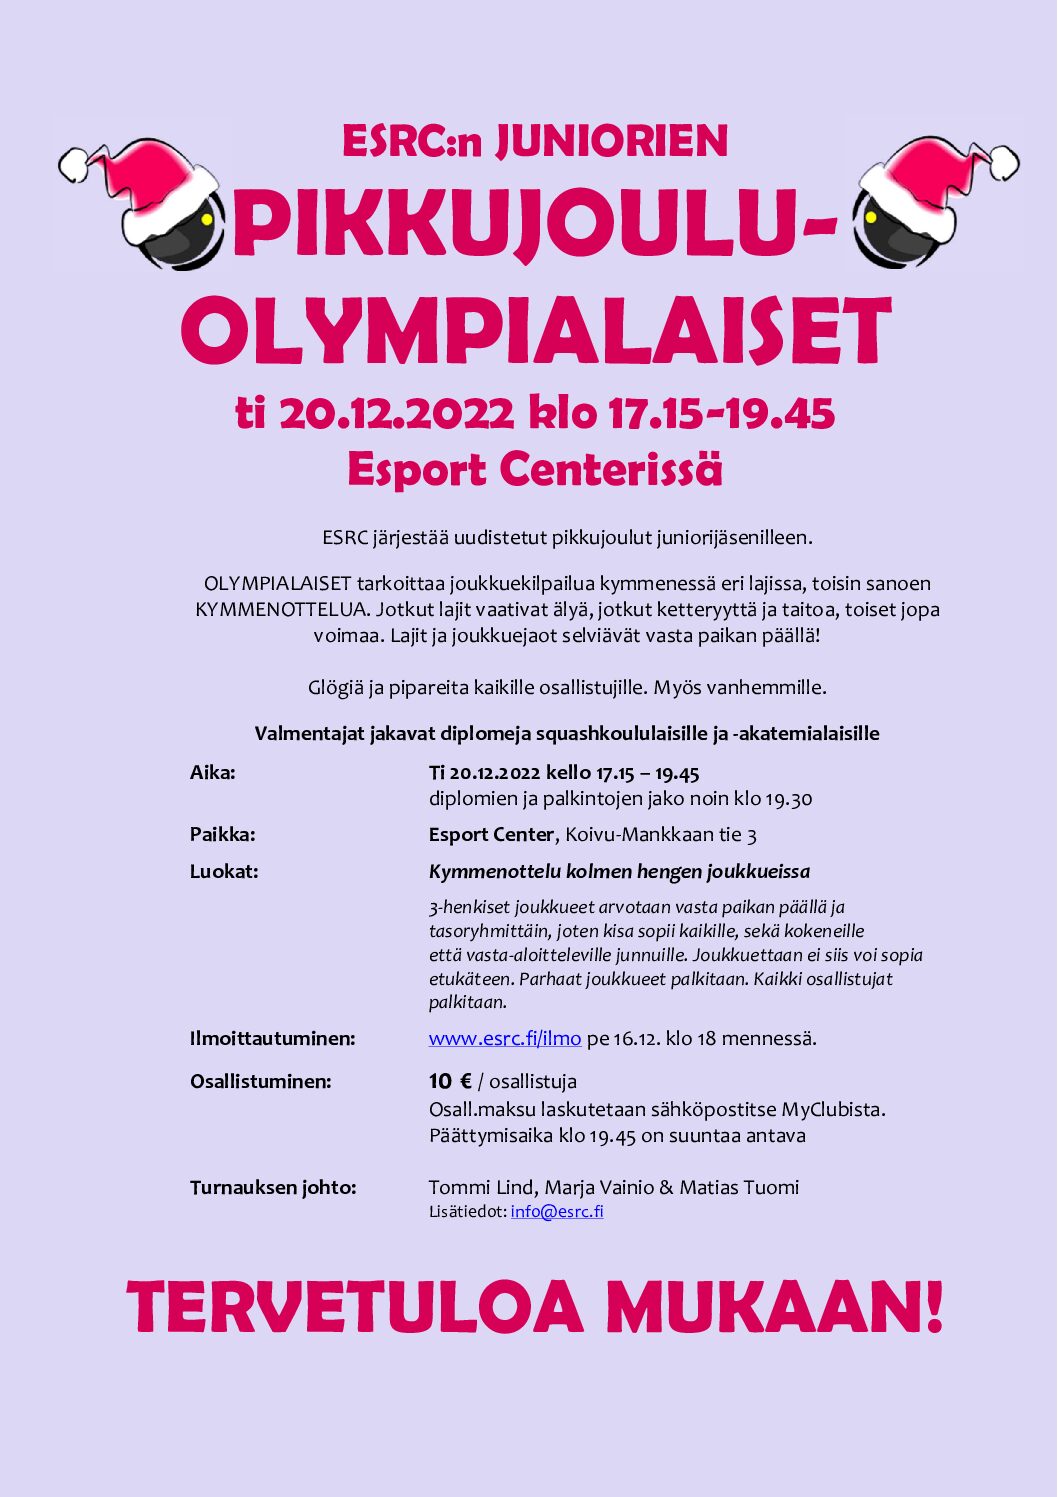 You are currently viewing Pikkujouluolympialaiset tiistai 20.12.2022 klo 17.15-19.45